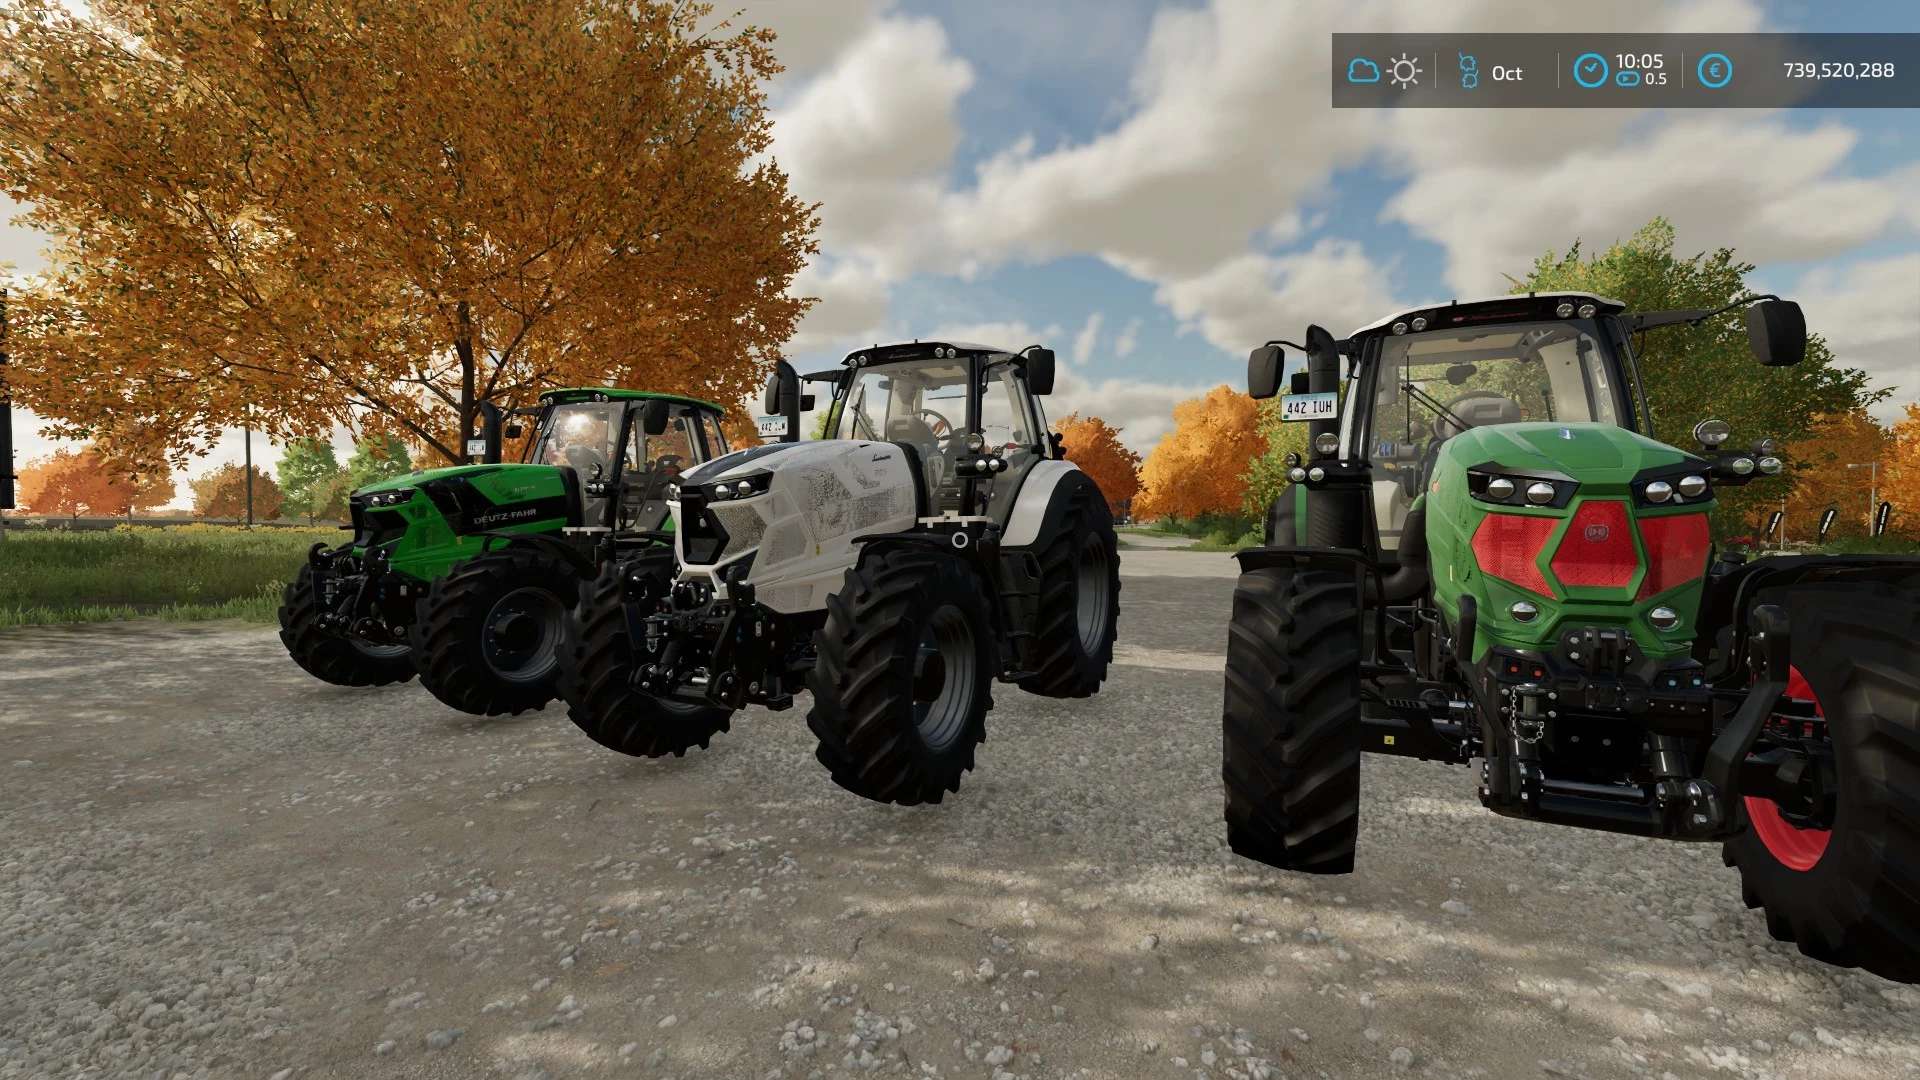 Моды на ферму симулятор 19. FS 22 Mods tractor. Ферма симулятор 19. Трактор Ламборгини. Фарминг симулятор 22 моды.